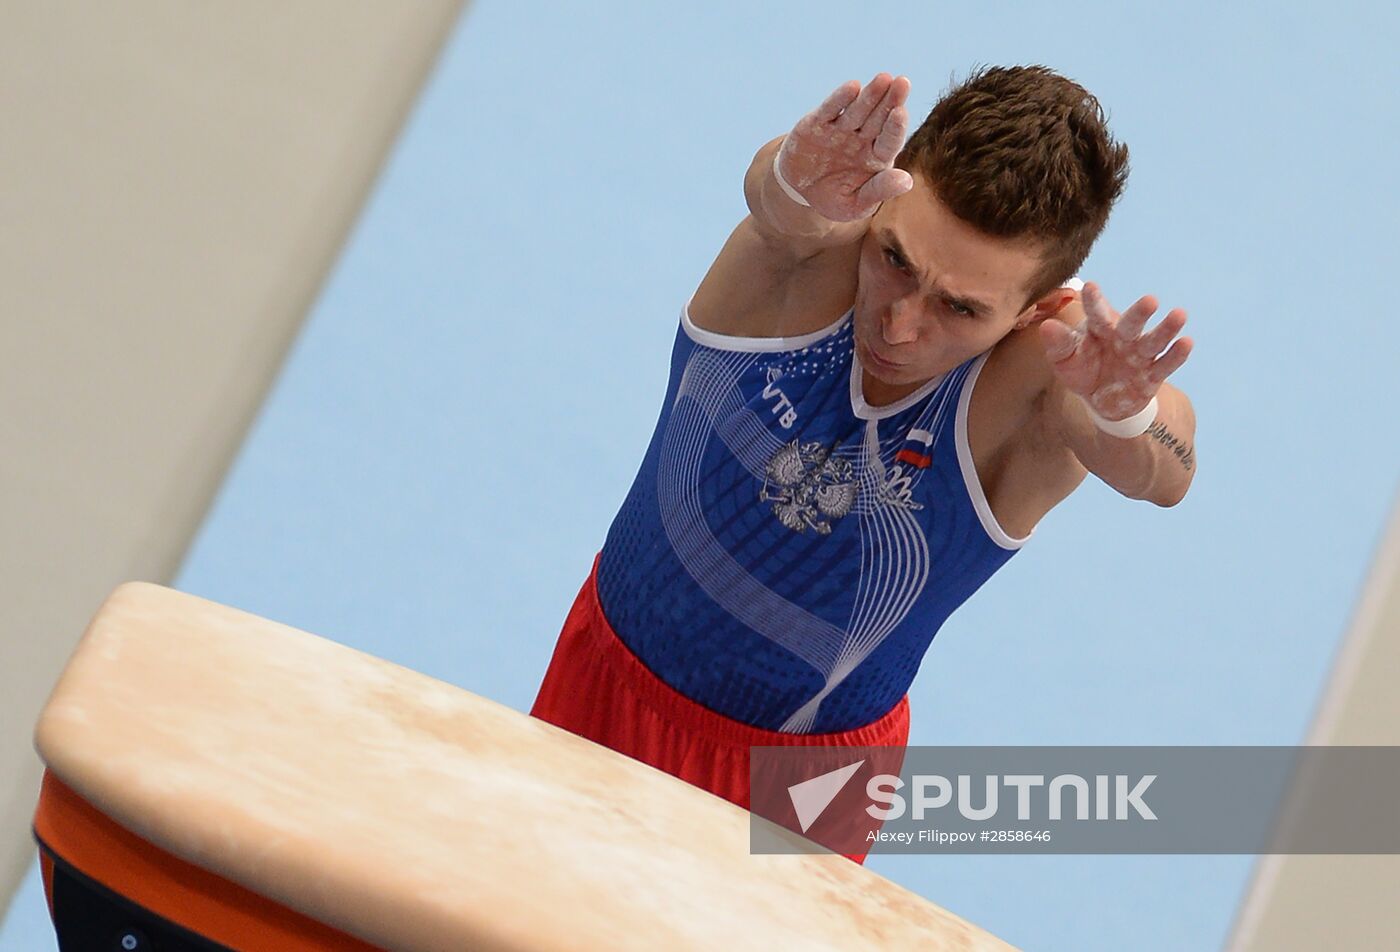 European Men's Artistic Gymnastics Championships. Team final